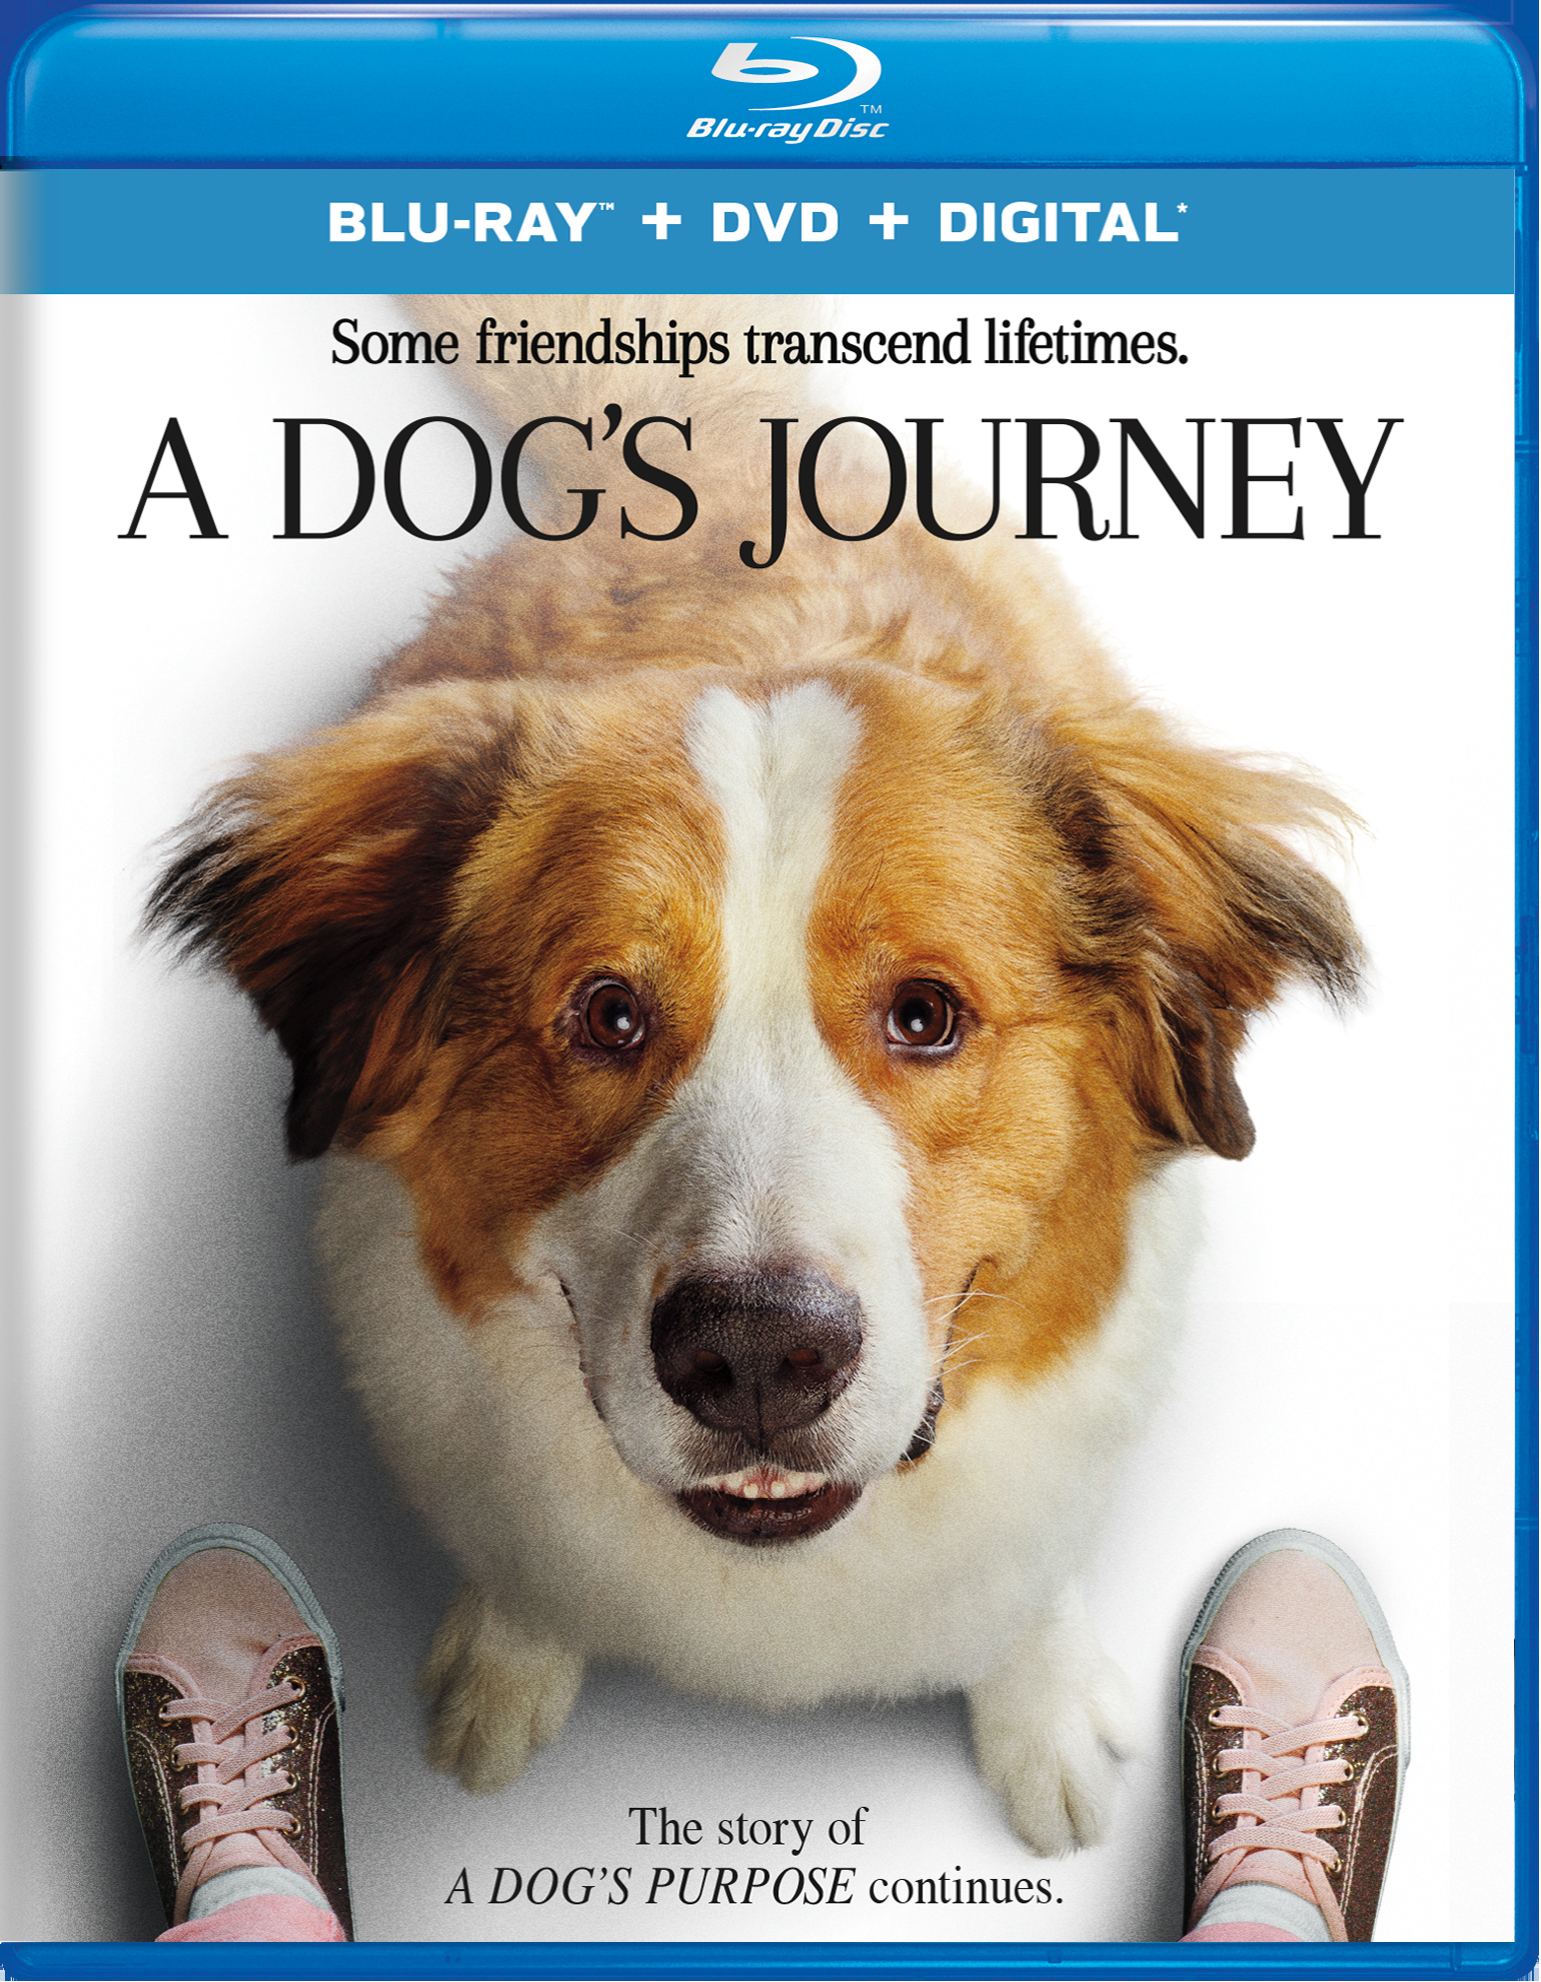 A Dog's Journey (DVD + Digital) - Blu-ray [ 2019 ]  - Comedy Movies On Blu-ray - Movies On GRUV